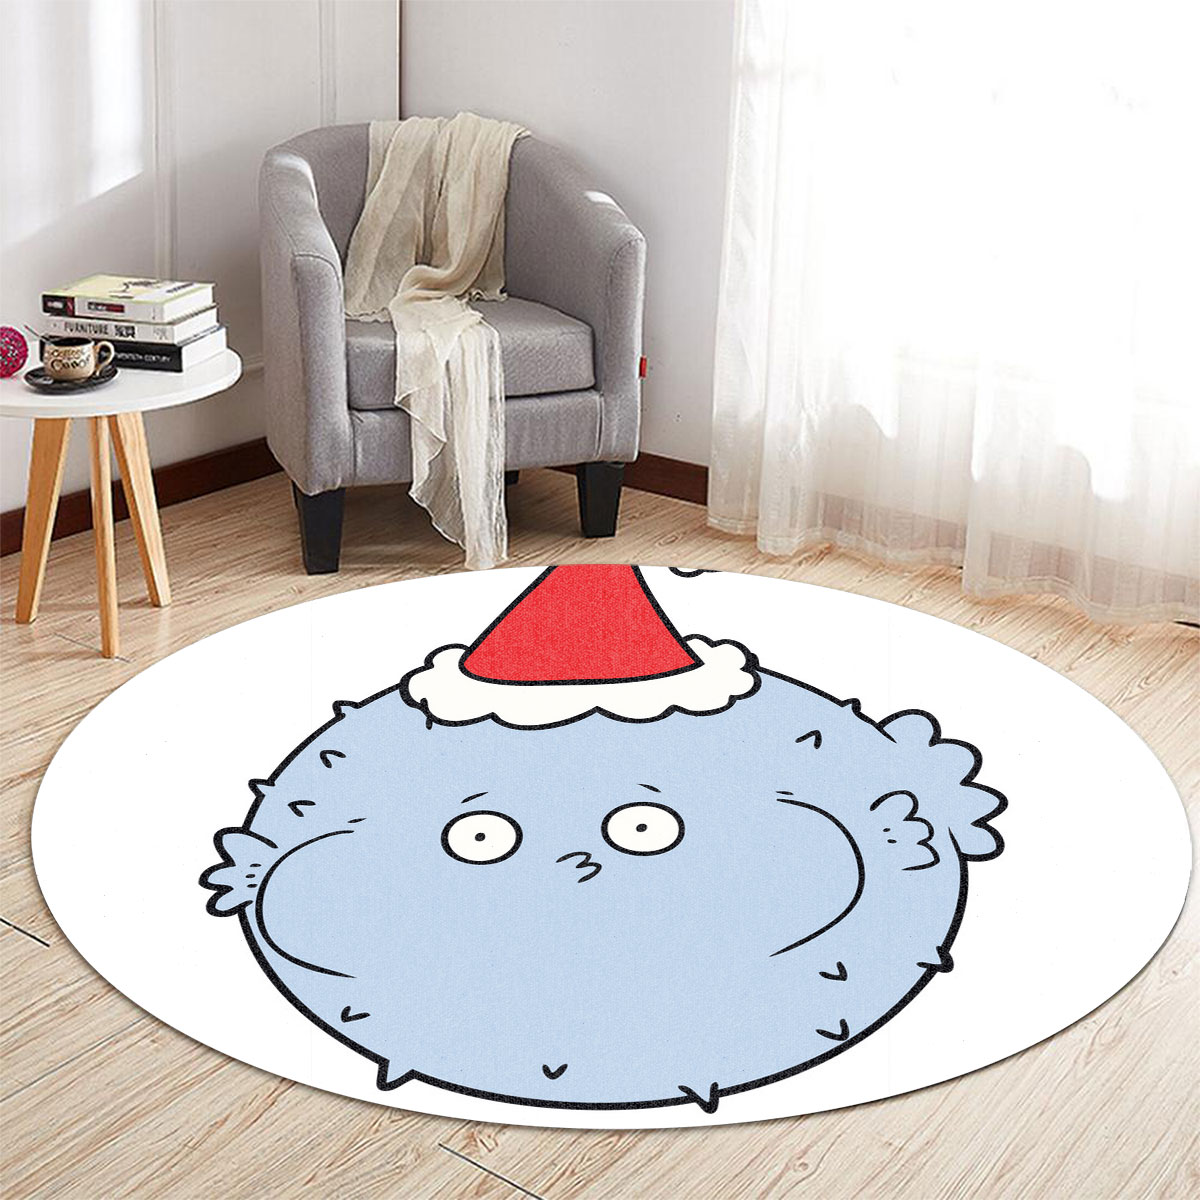 Cartoon Christmas Puffer Fish Round Carpet